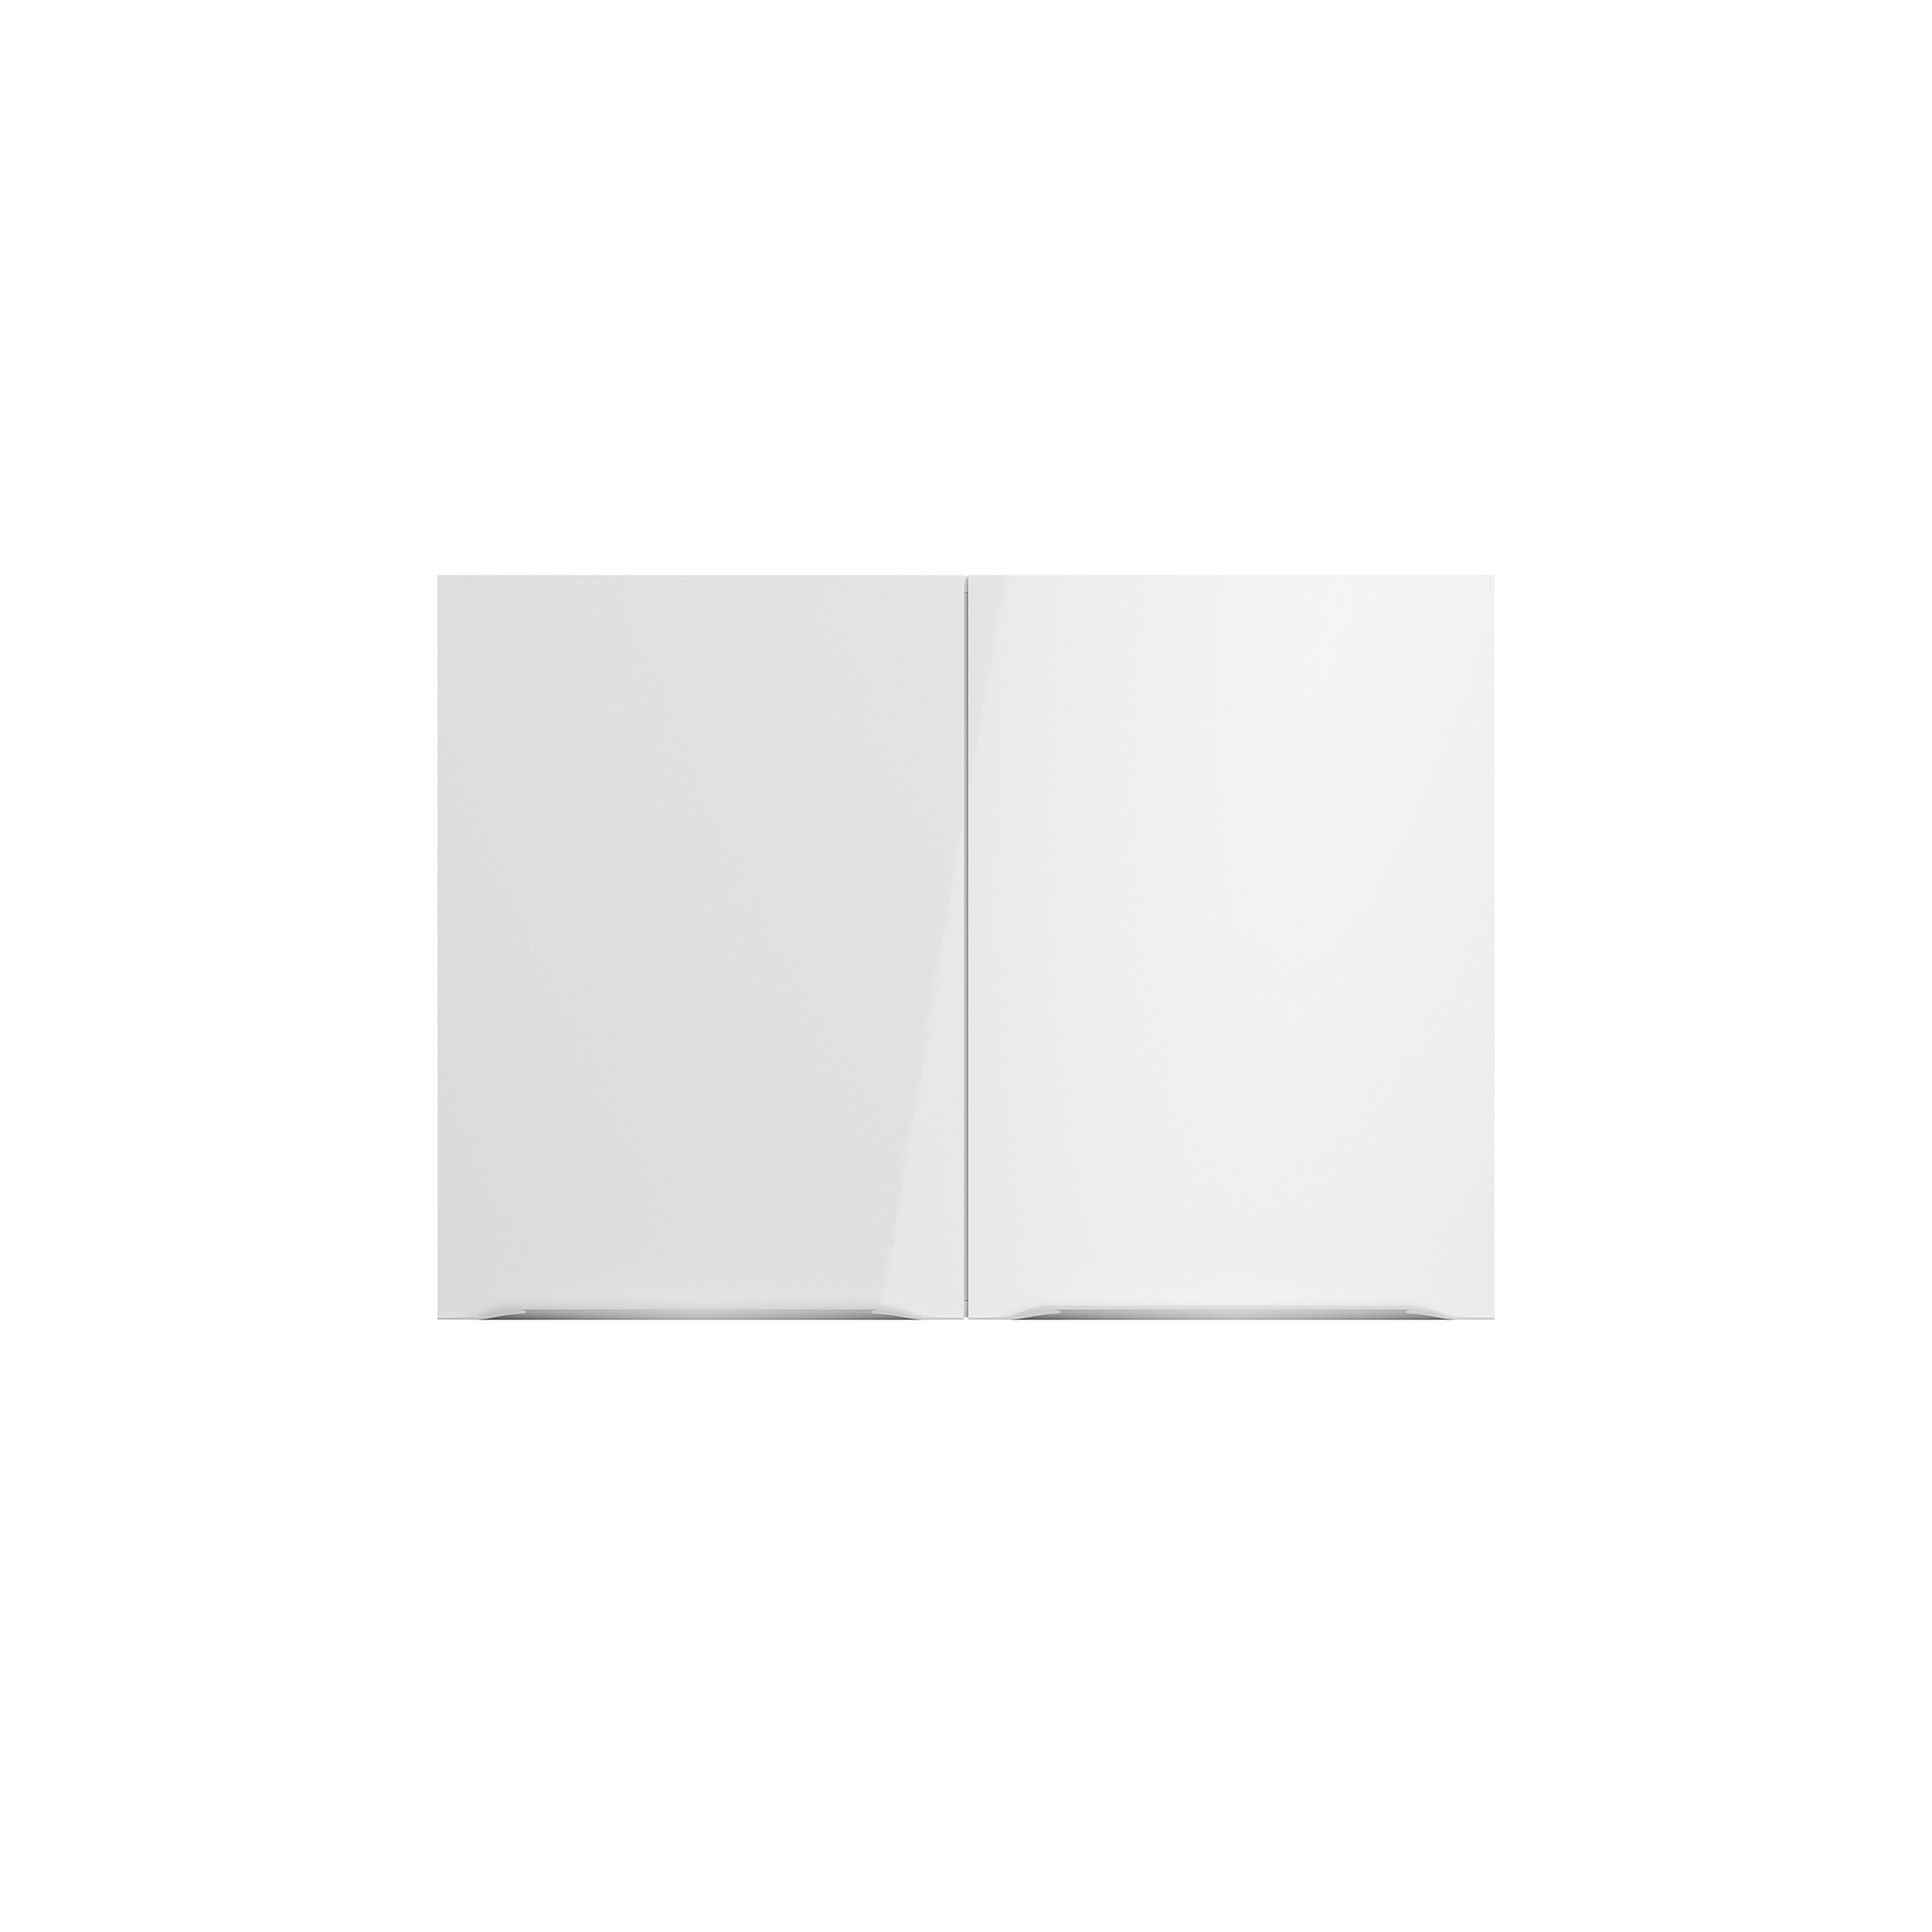 Oberschrank 'Optikomfort Arvid986' weiß 100 x 70,4 x 34,9 cm + product picture